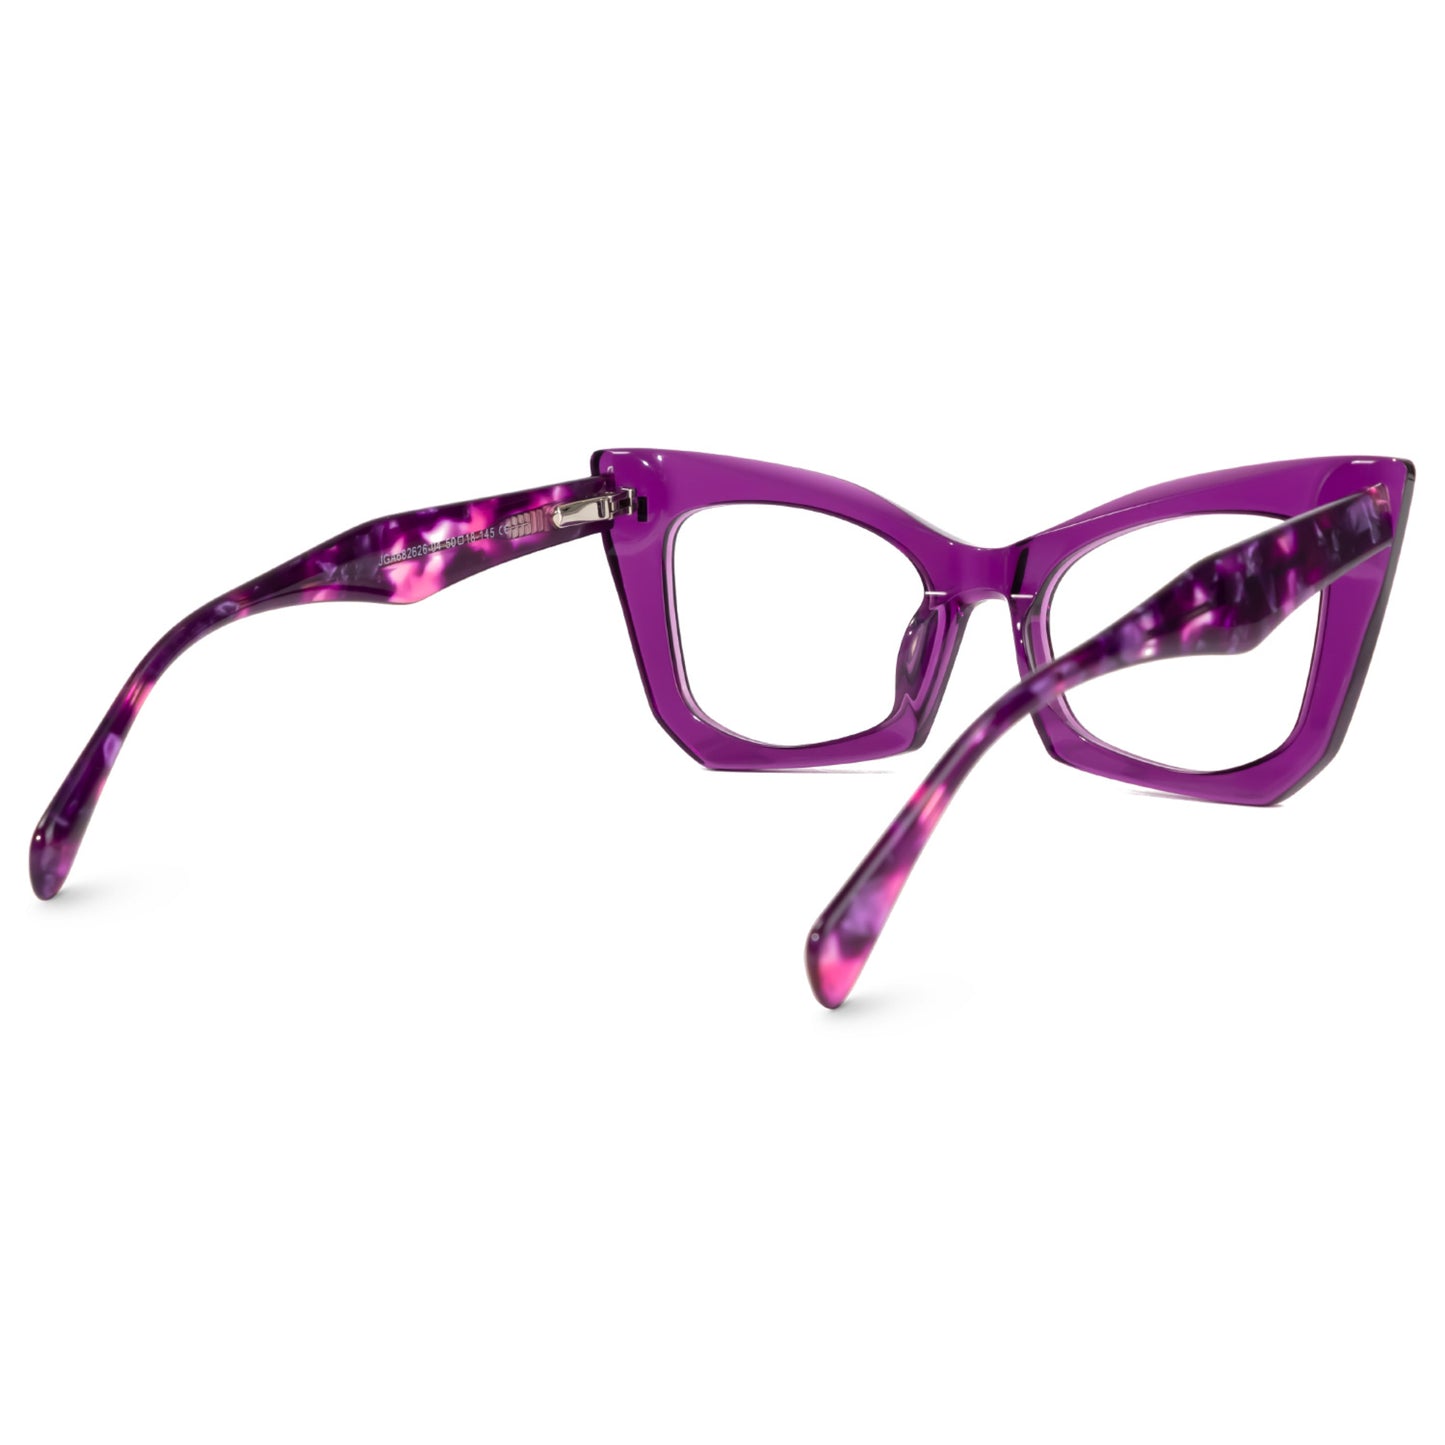 Adriana - Blue Light Glasses- Optin Store